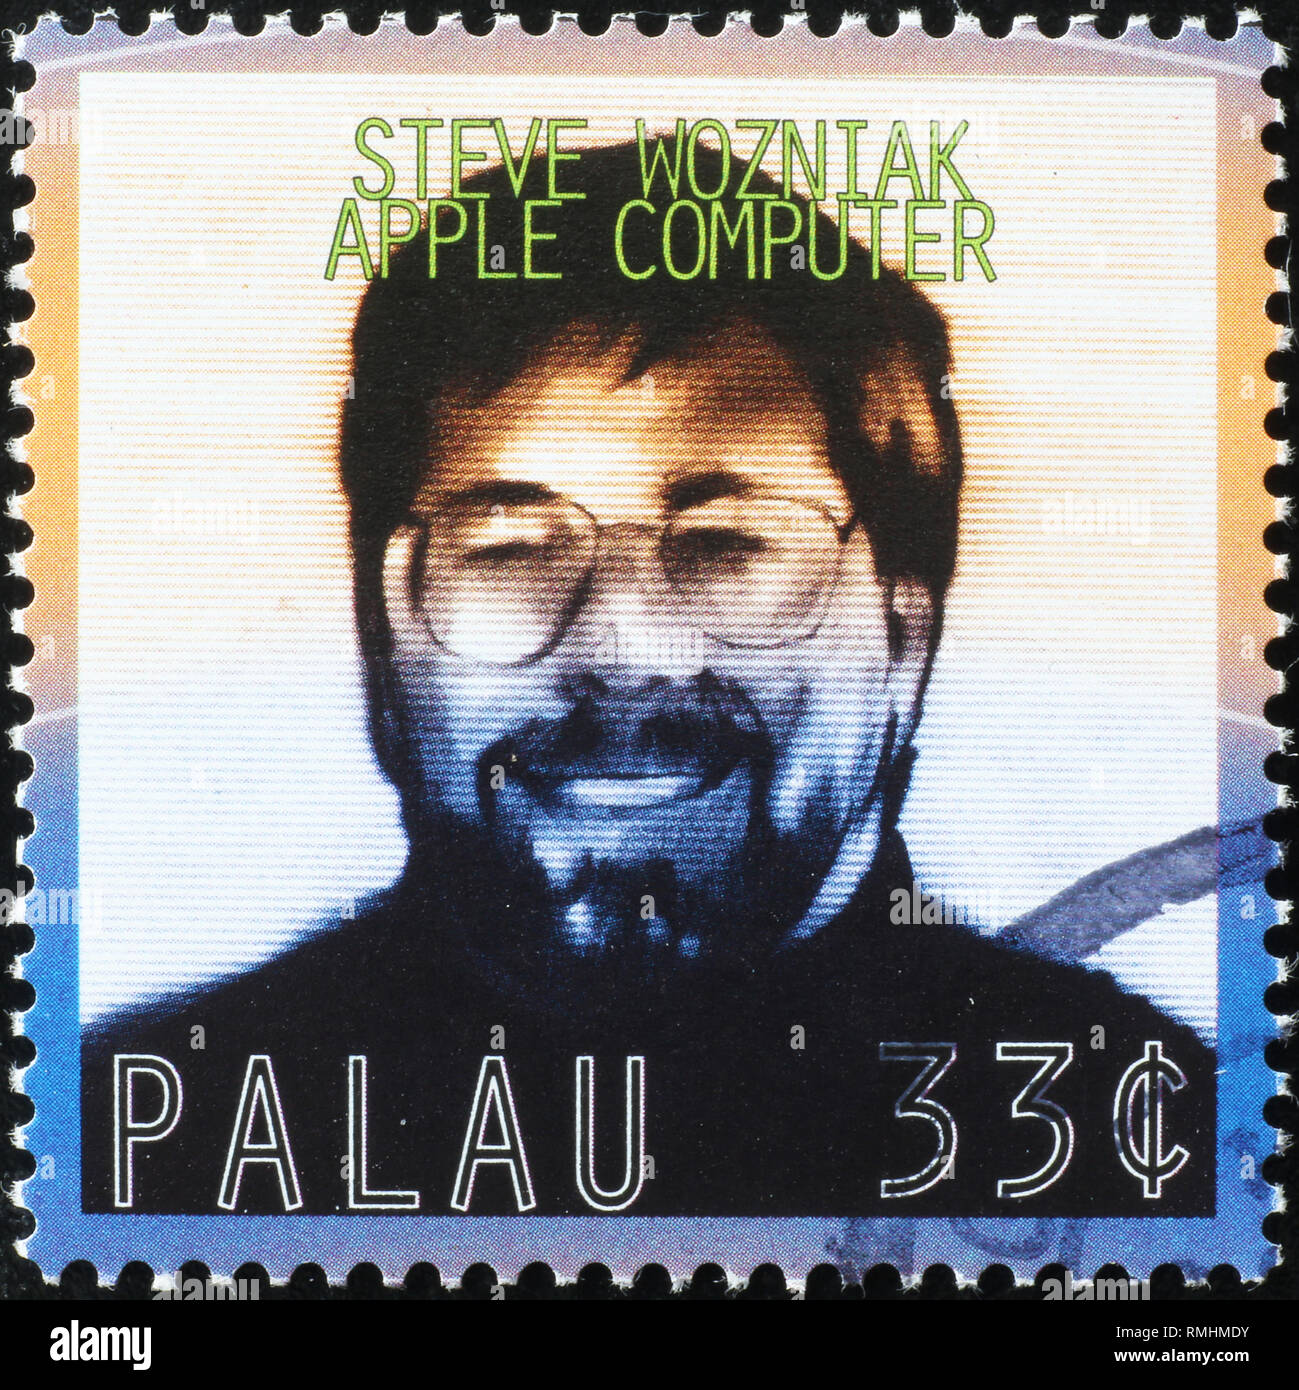 Steve Wozniak, Co-founder of Apple Computers on stamp Stock Photo